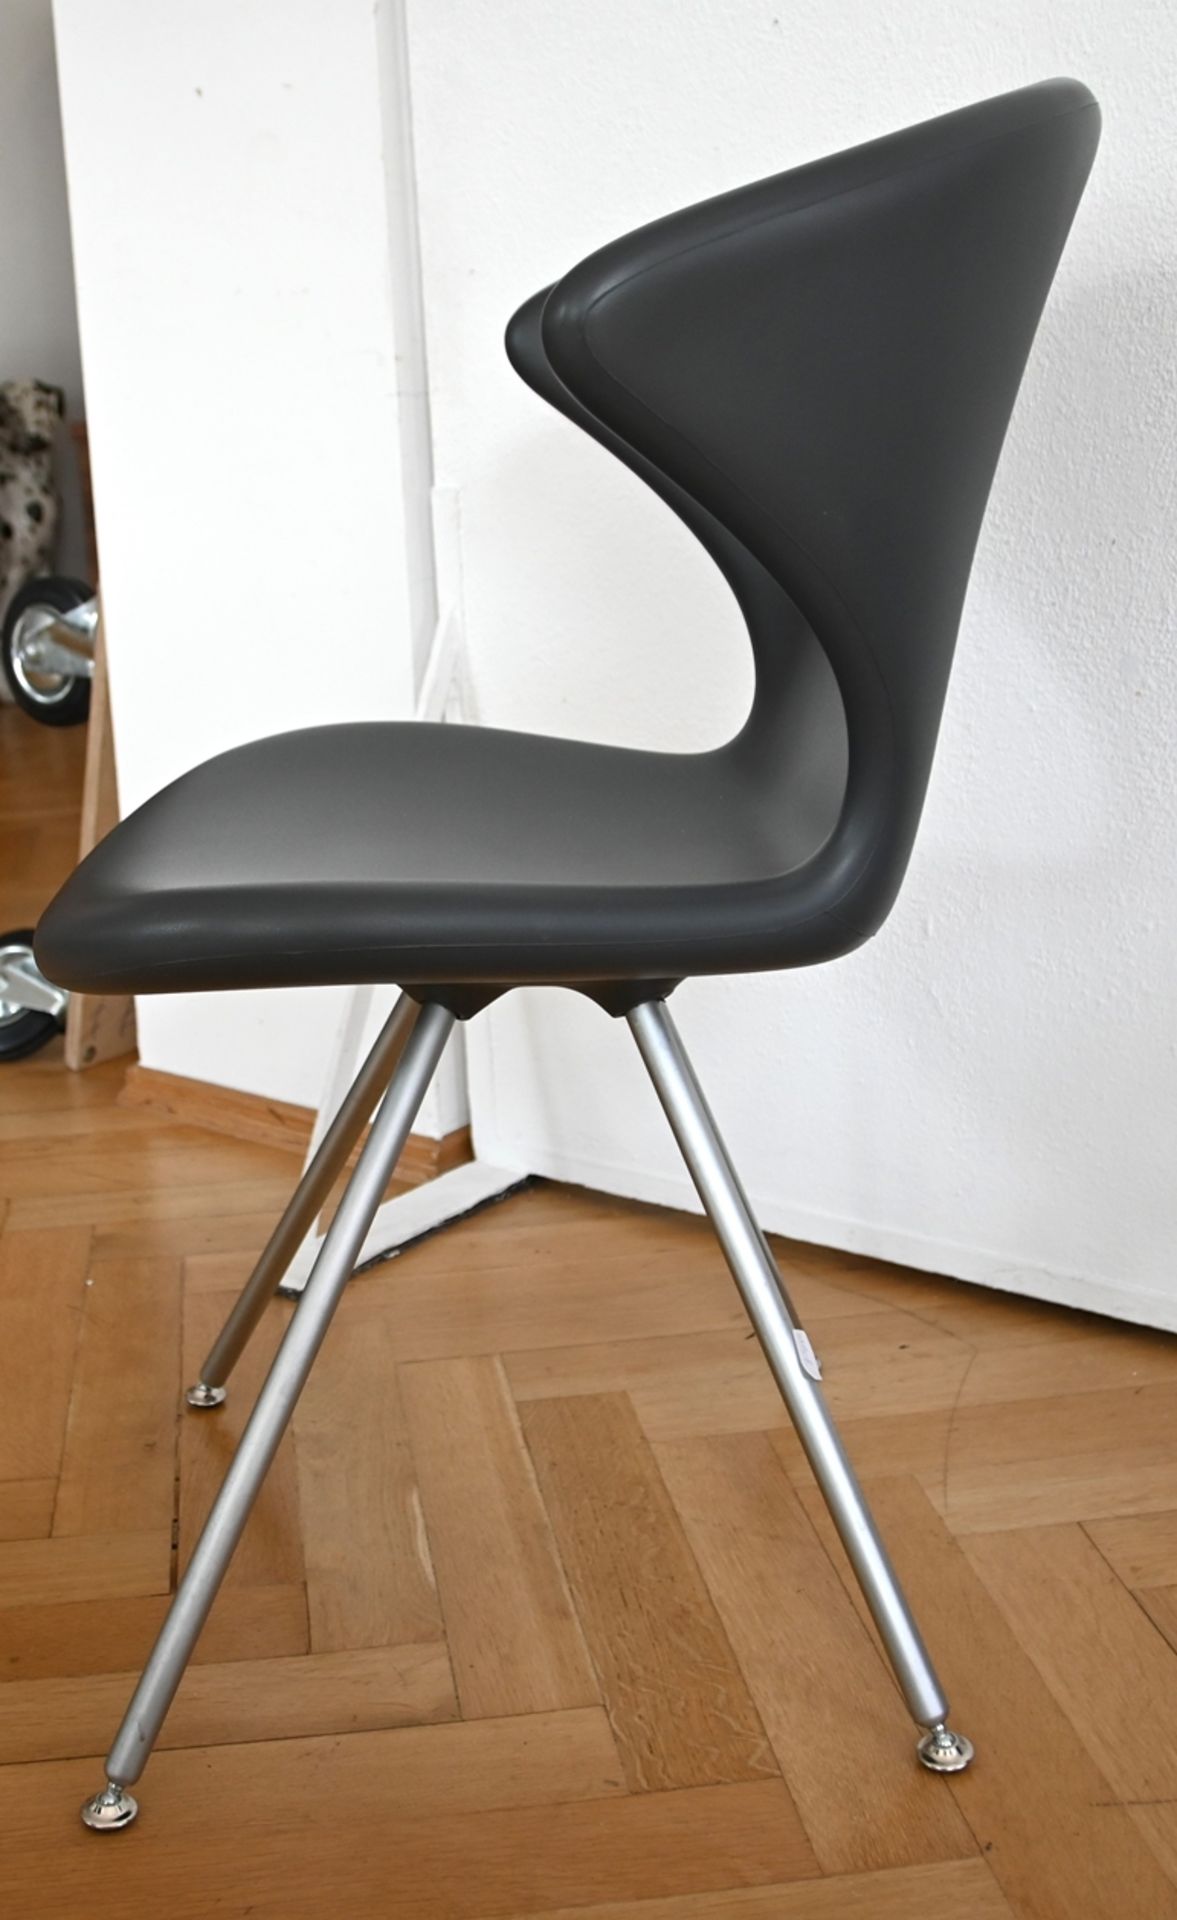 Design chair, Tonon Concept 902 with metal feet, curved shape, design Martin Ballendat (1958 Bochum - Image 2 of 3